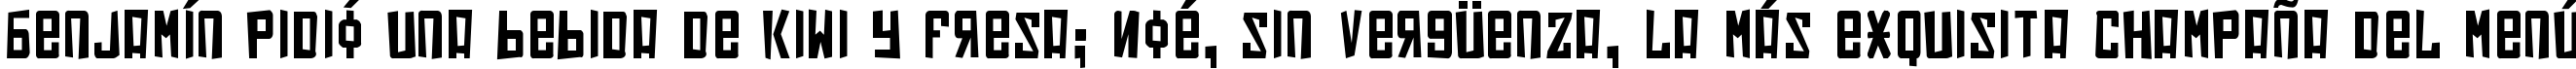 Пример написания шрифтом Soviet Punk текста на испанском